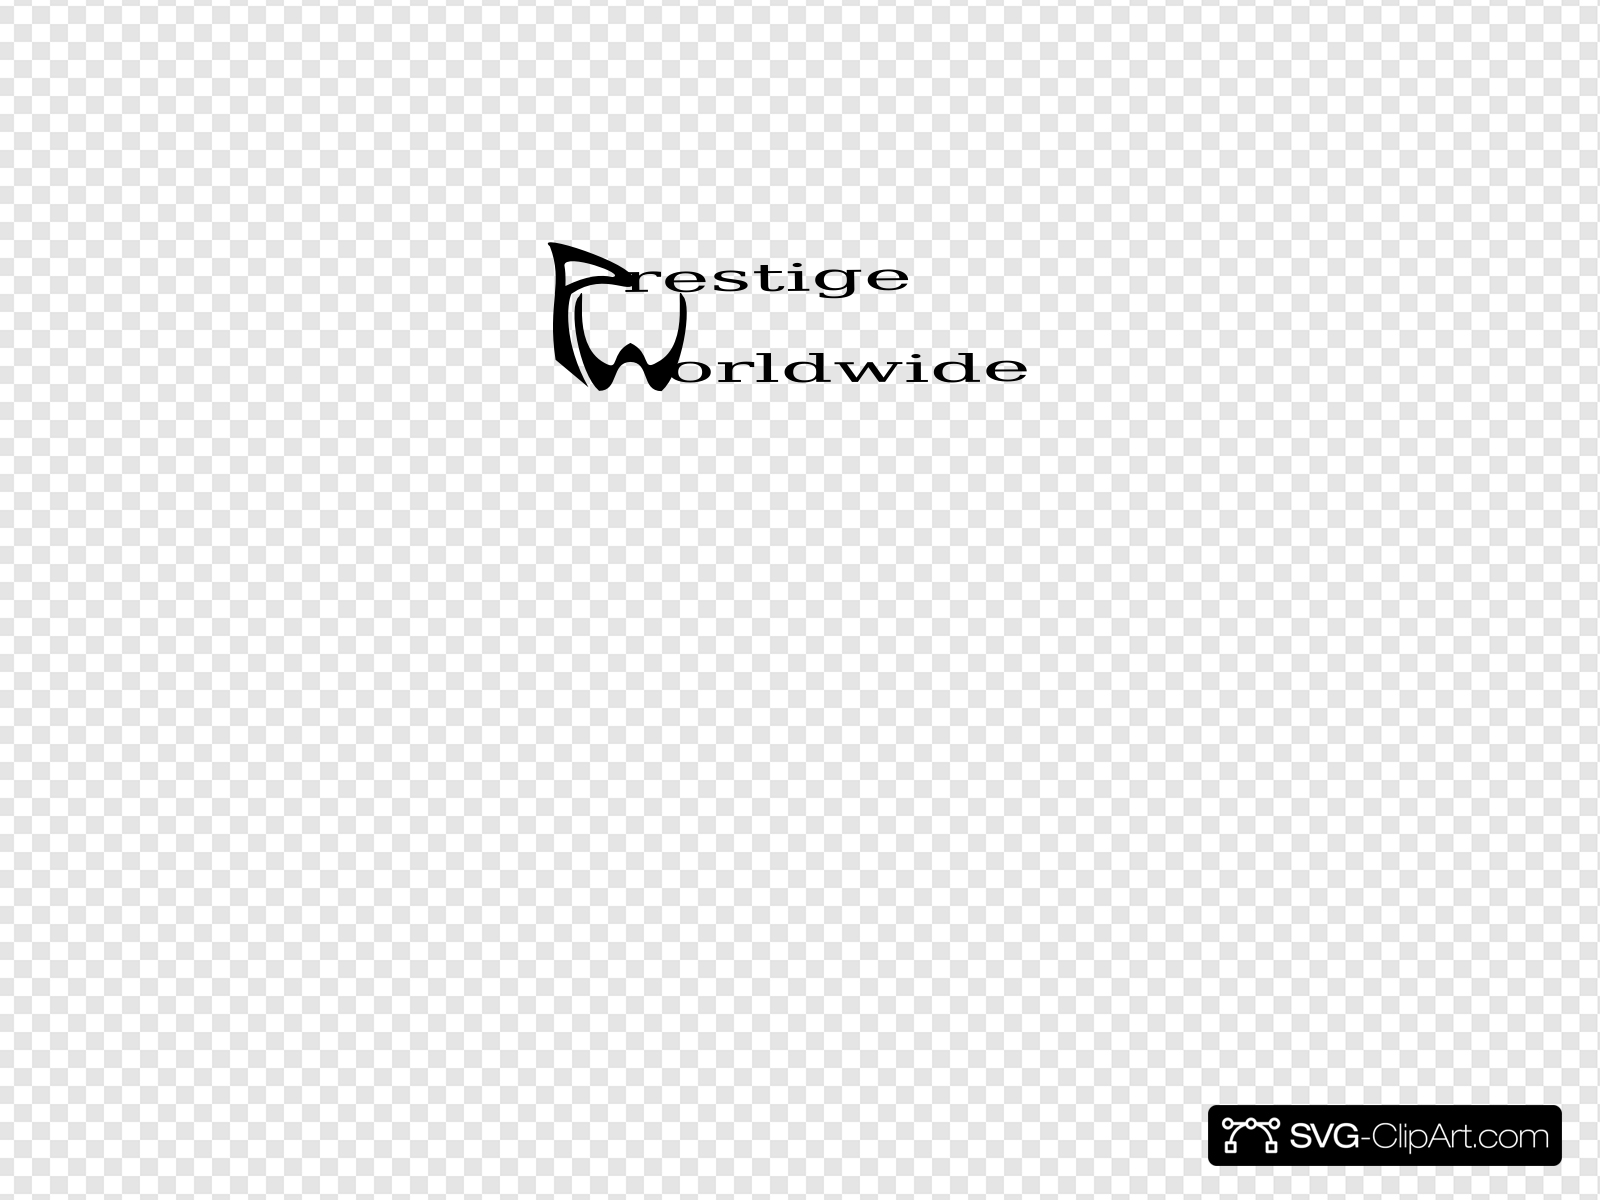 Prestige Worldwide Logo Clip art, Icon and SVG.